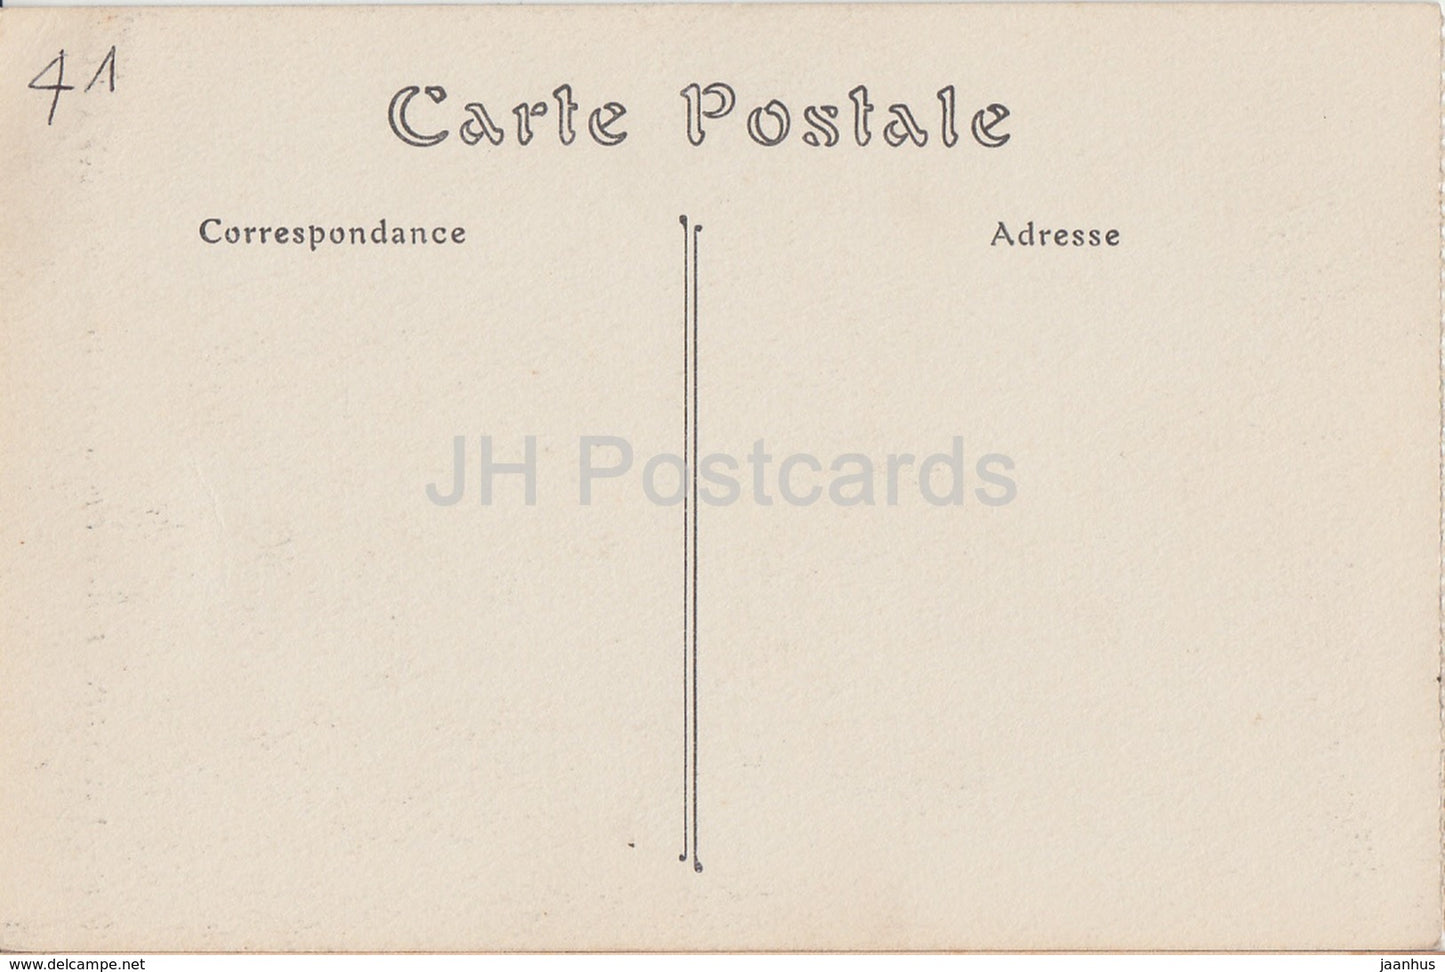 Lavardin - Porte et Donjon du Chateau - Burgruine - 21 - alte Postkarte - Frankreich - unbenutzt